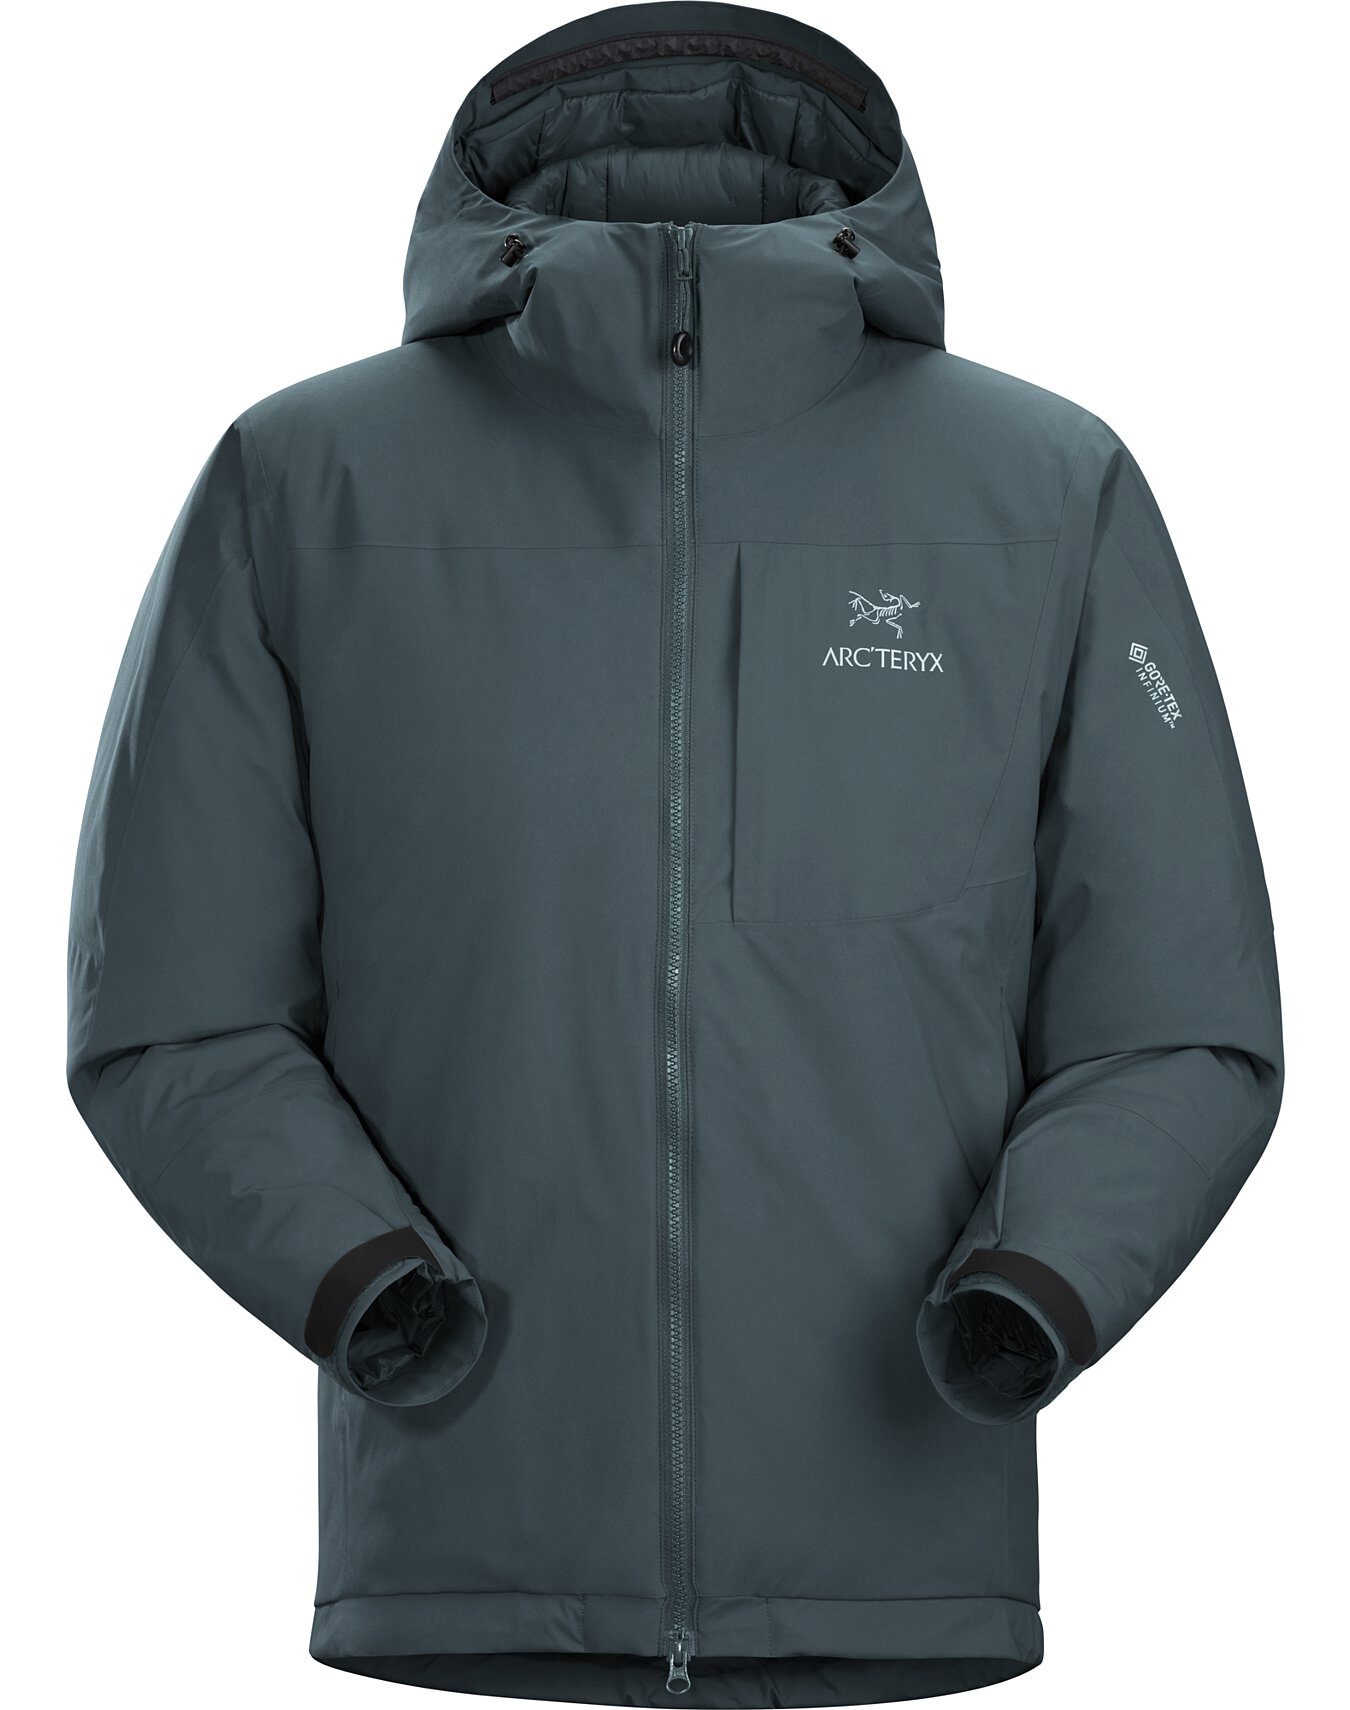 kappa ski jacket